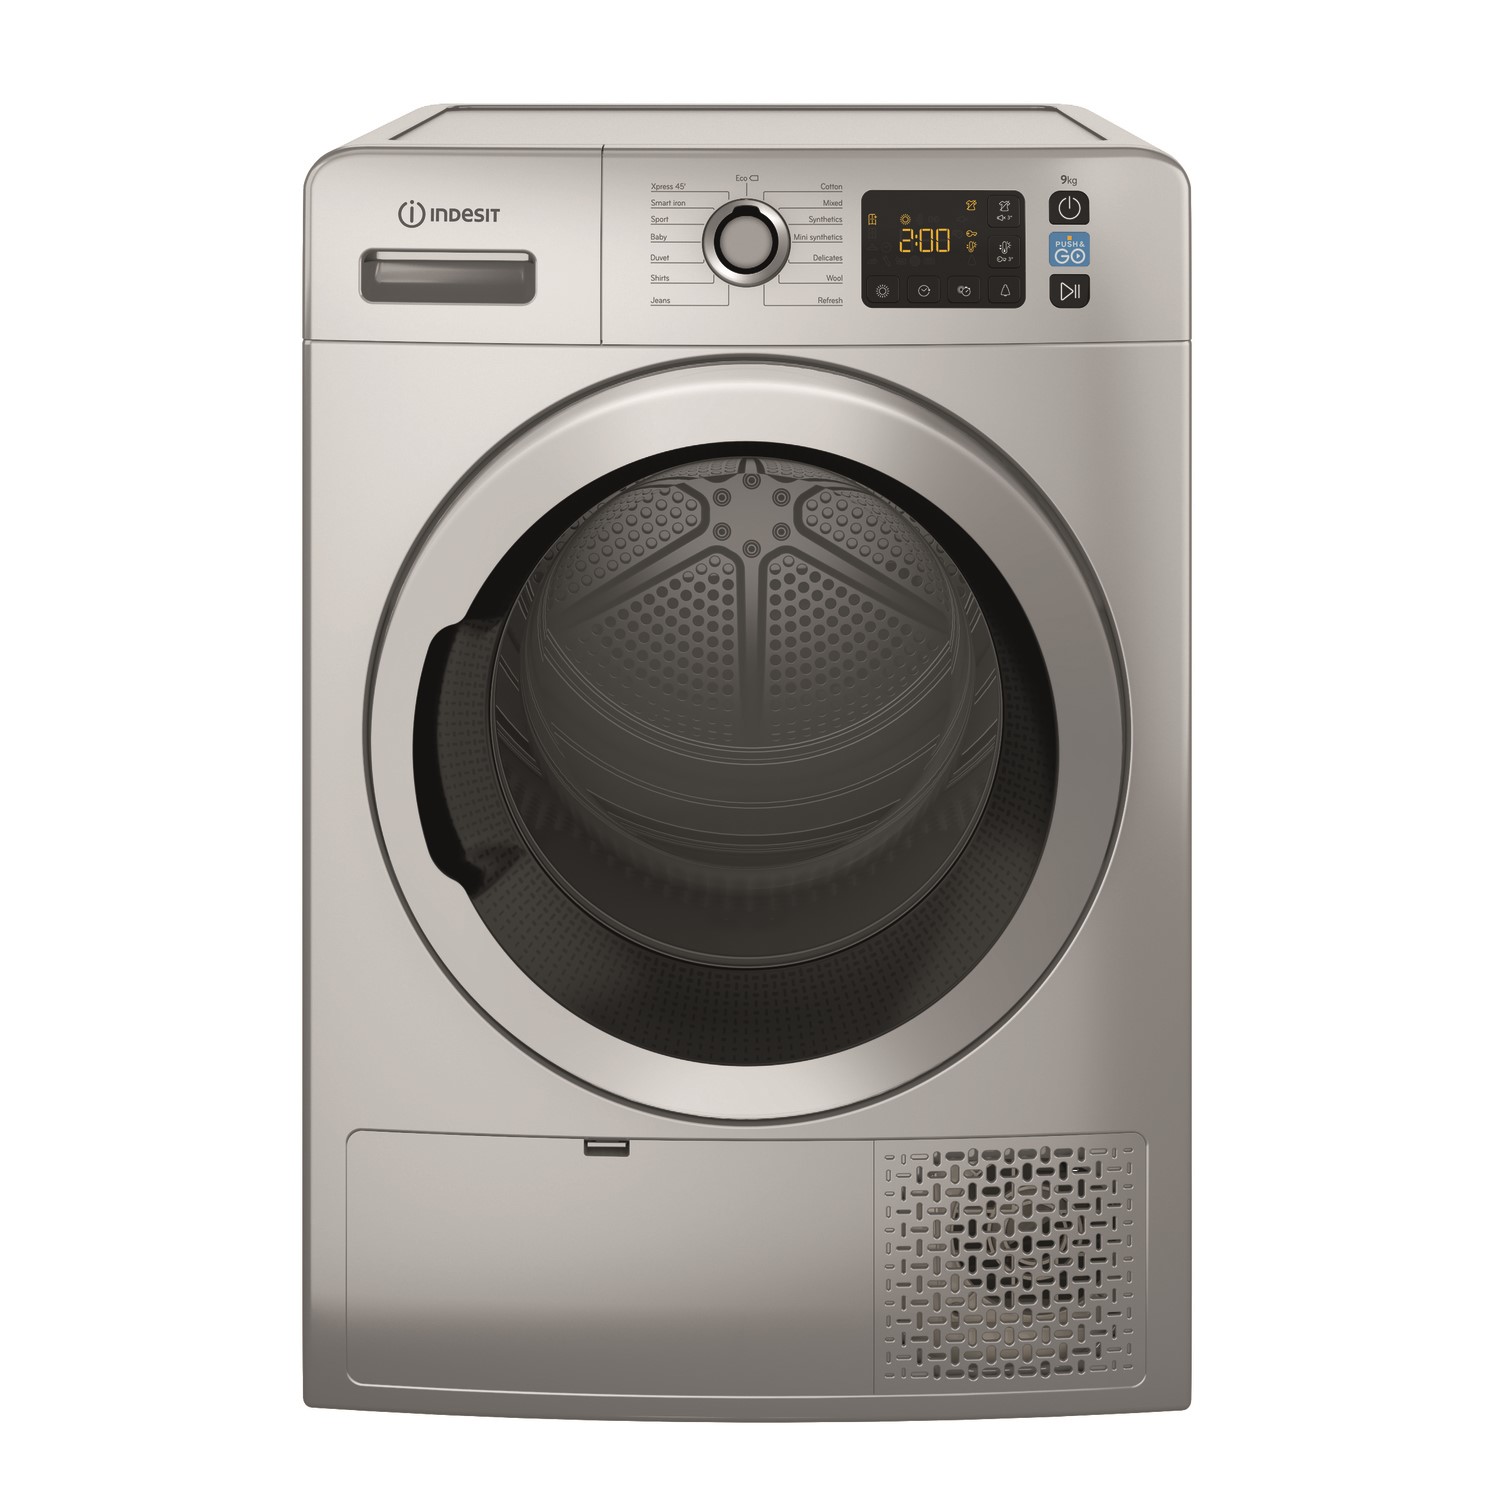 Photos - Tumble Dryer Indesit Push&Go 9kg Heat Pump Dryer - Silver 869991667950 